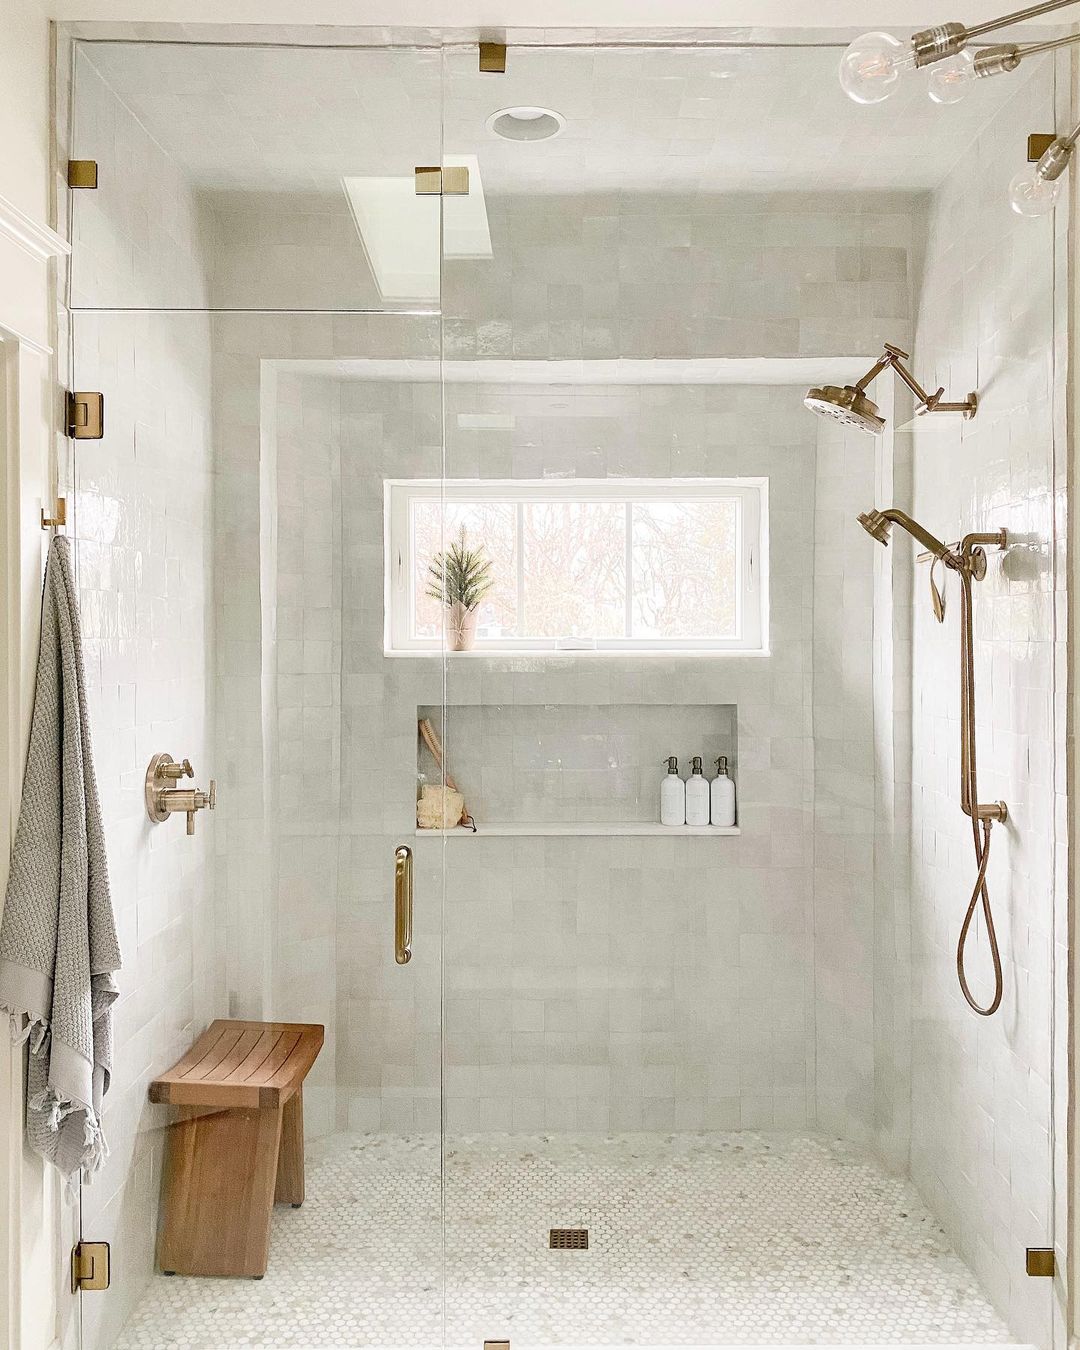 Large, clean shower. Photo by Instagram user @raising3foodies.